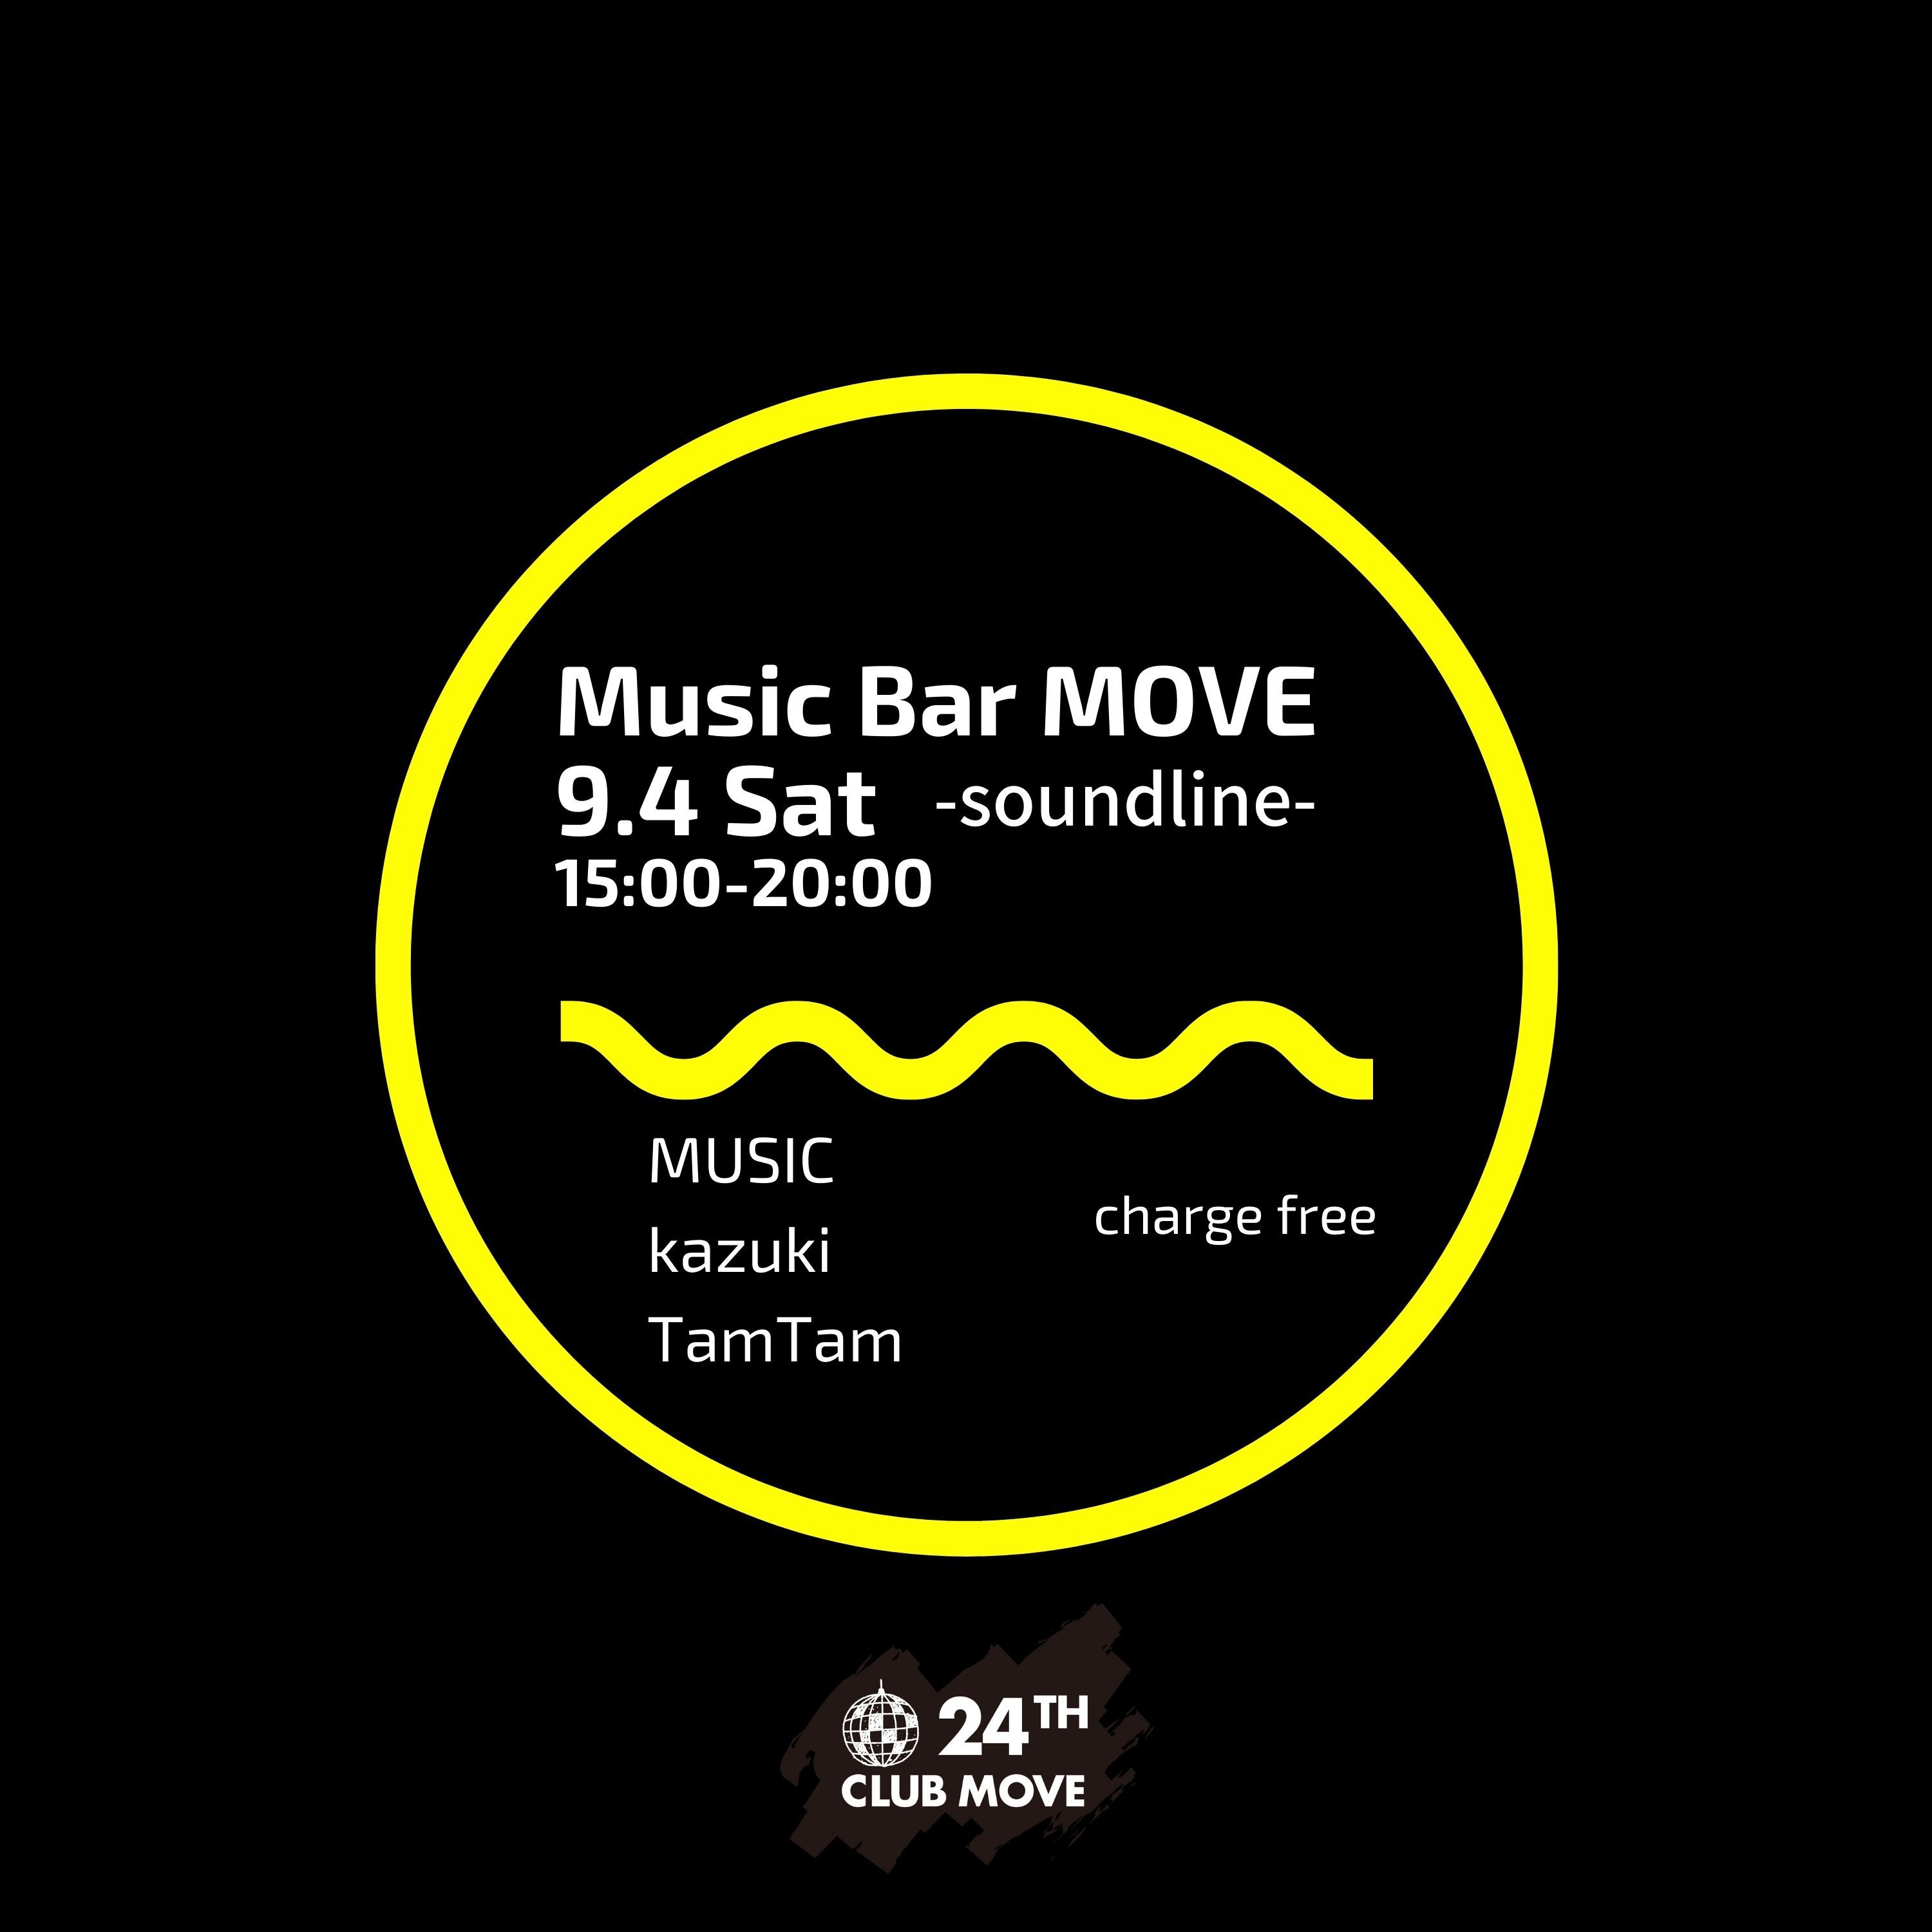 Music Bar MOVE -soundline-